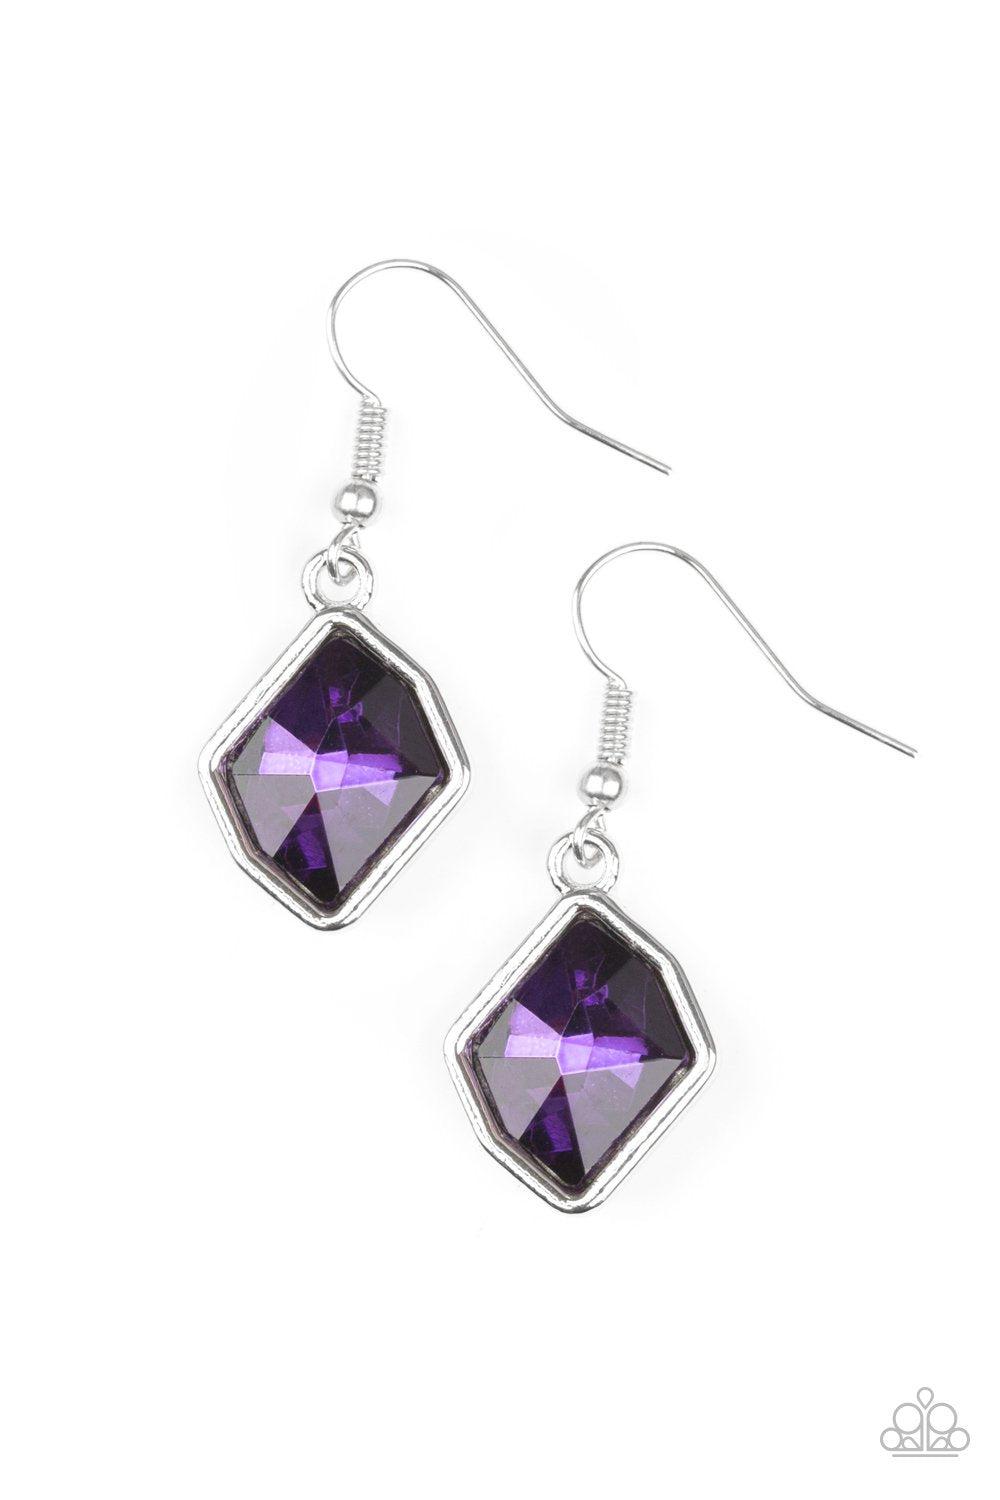 Glow It Up Purple Gem Earrings - Paparazzi Accessories-CarasShop.com - $5 Jewelry by Cara Jewels